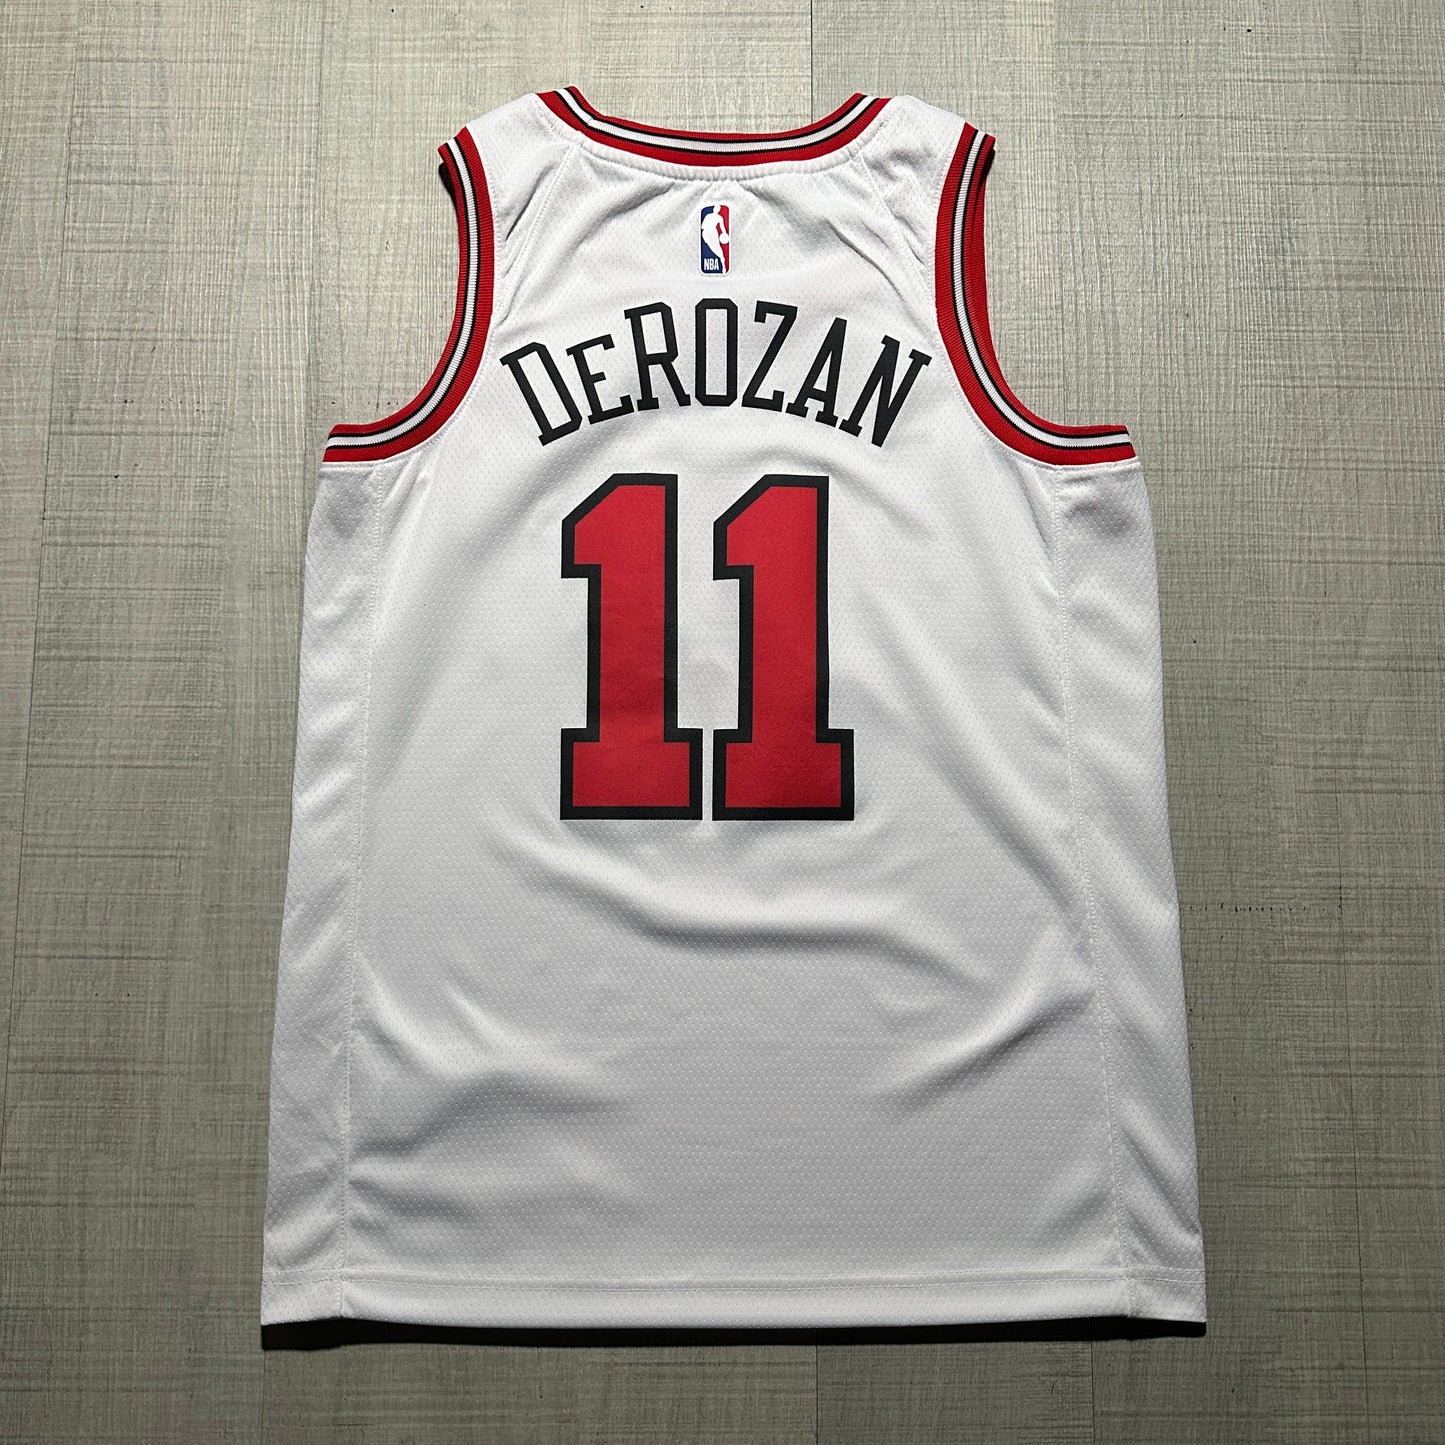 DeMar DeRozan Chicago Bulls Association Edition Nike Jersey